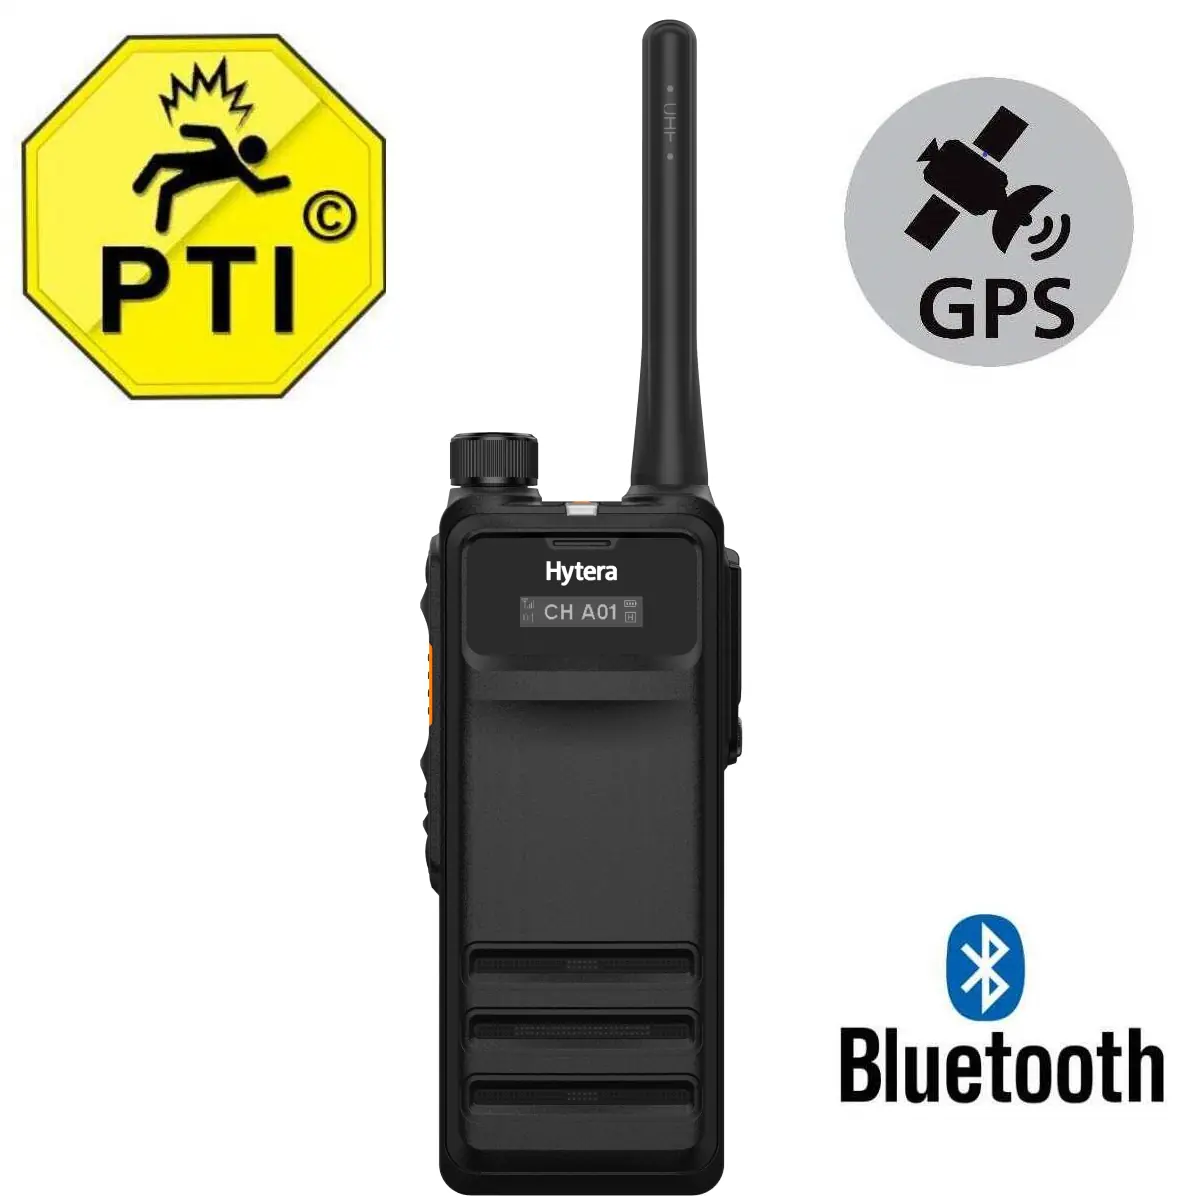 Hytera HP705 - Portofoon vergunningsplichtig BIW, Bluetooth, GPS